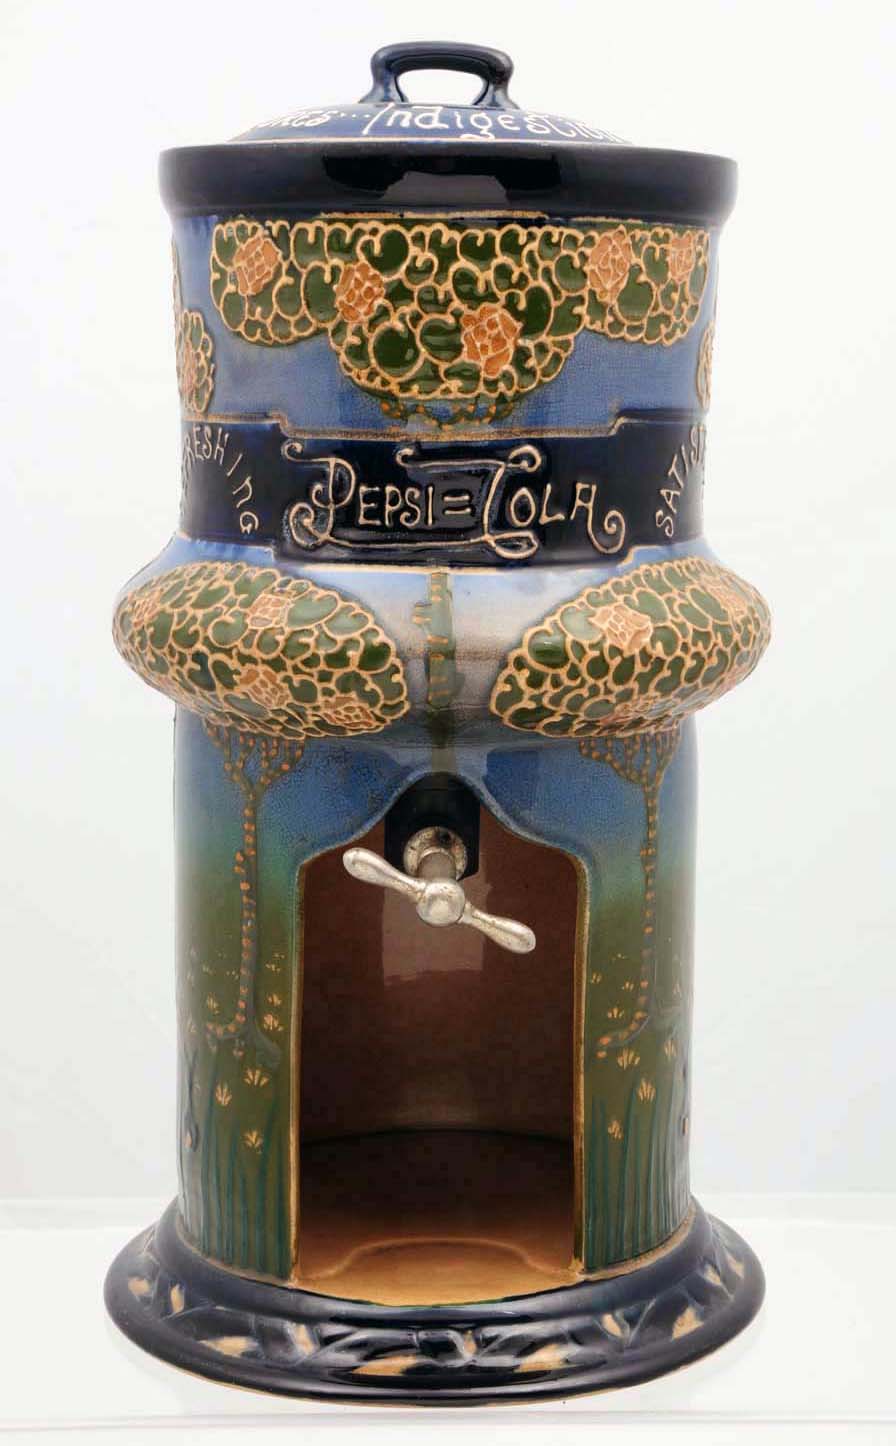 Pepsi-Cola china syrup urn with quintessential Art Nouveau-style decoration, est. $20,000-$40,000. Morphy Auctions image